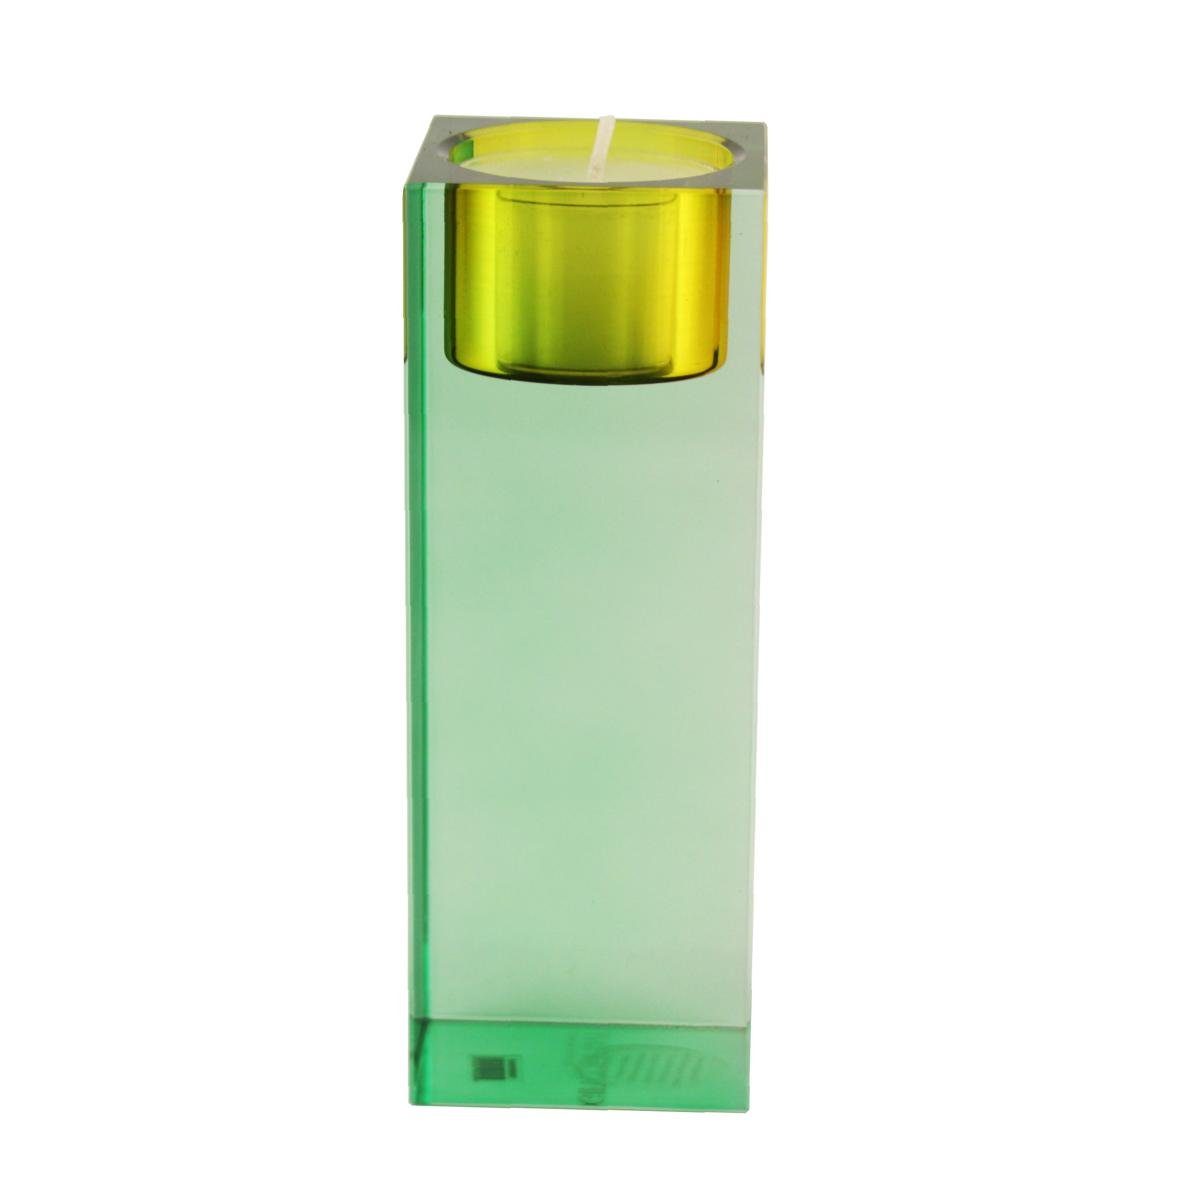 ca. Gift-Company Kristallglas (Stück) Teelichthalter Giftcompany Sari cm 14 H grün/gelb Teelichthalter